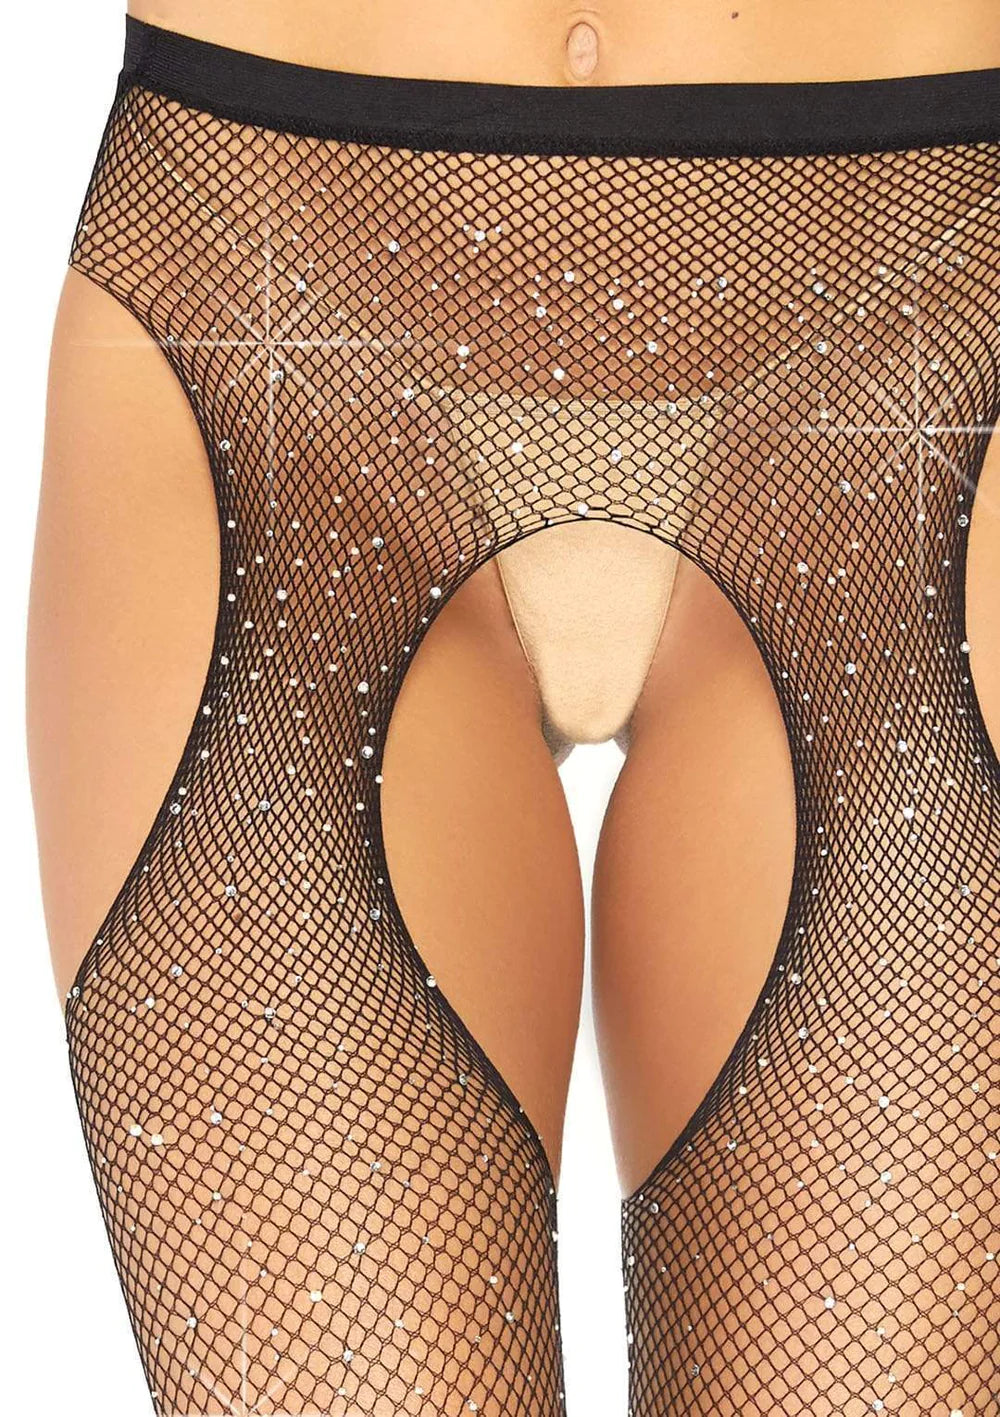 Rhinestone Fishnet Suspender Pantyhose - One Size